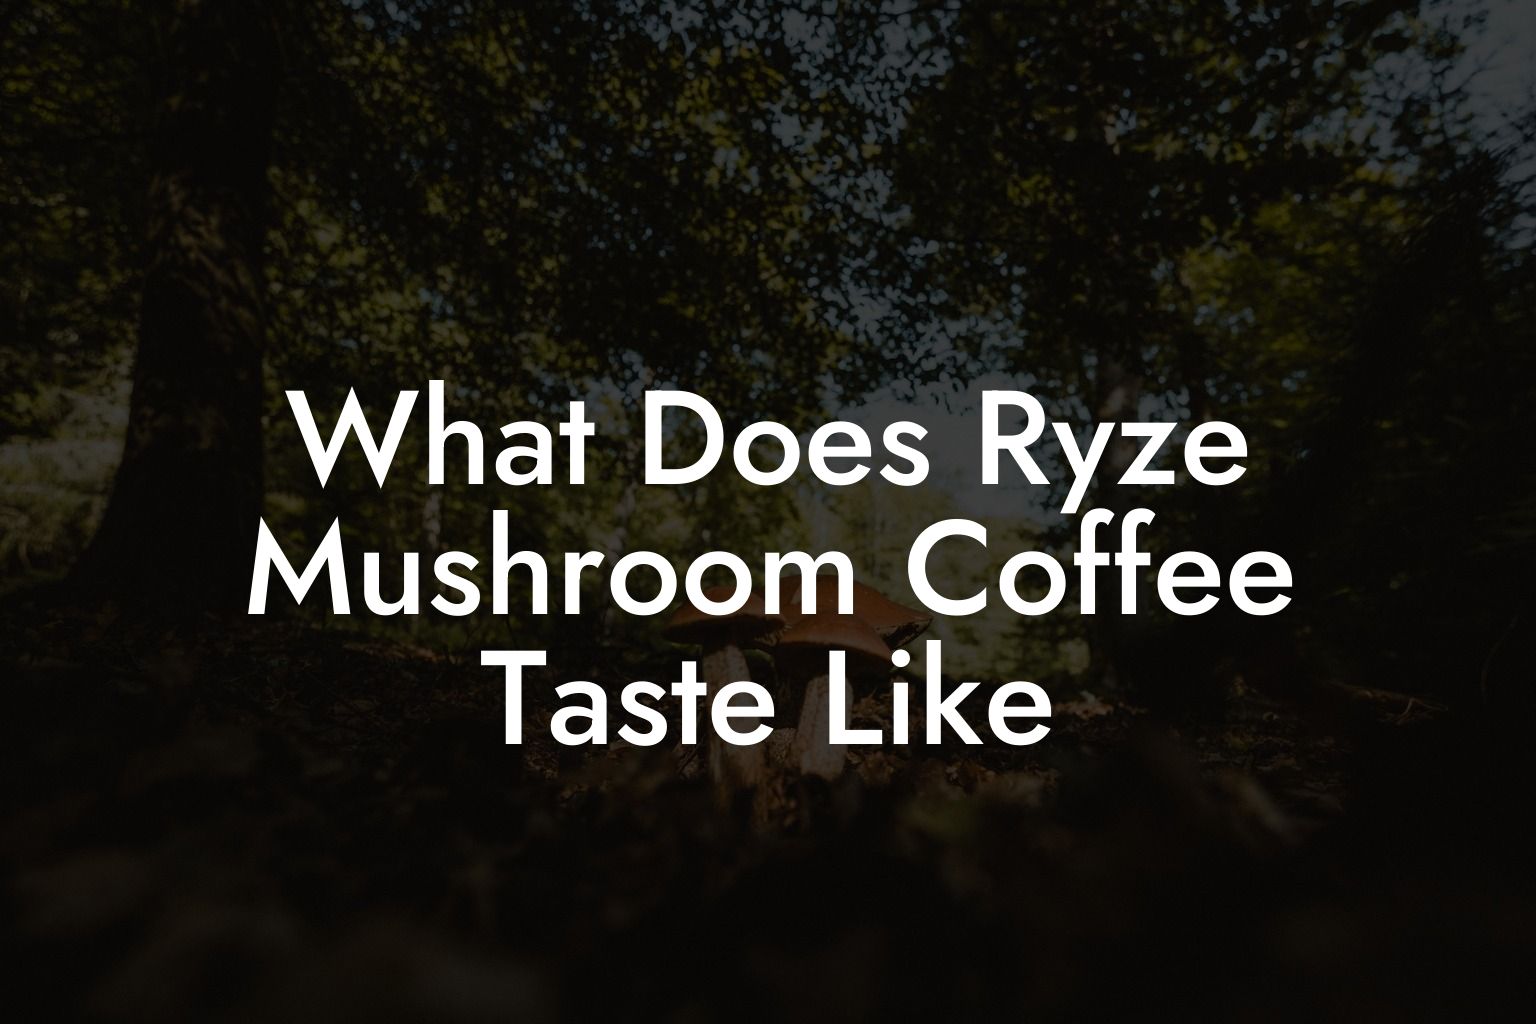 What Does Ryze Mushroom Coffee Taste Like